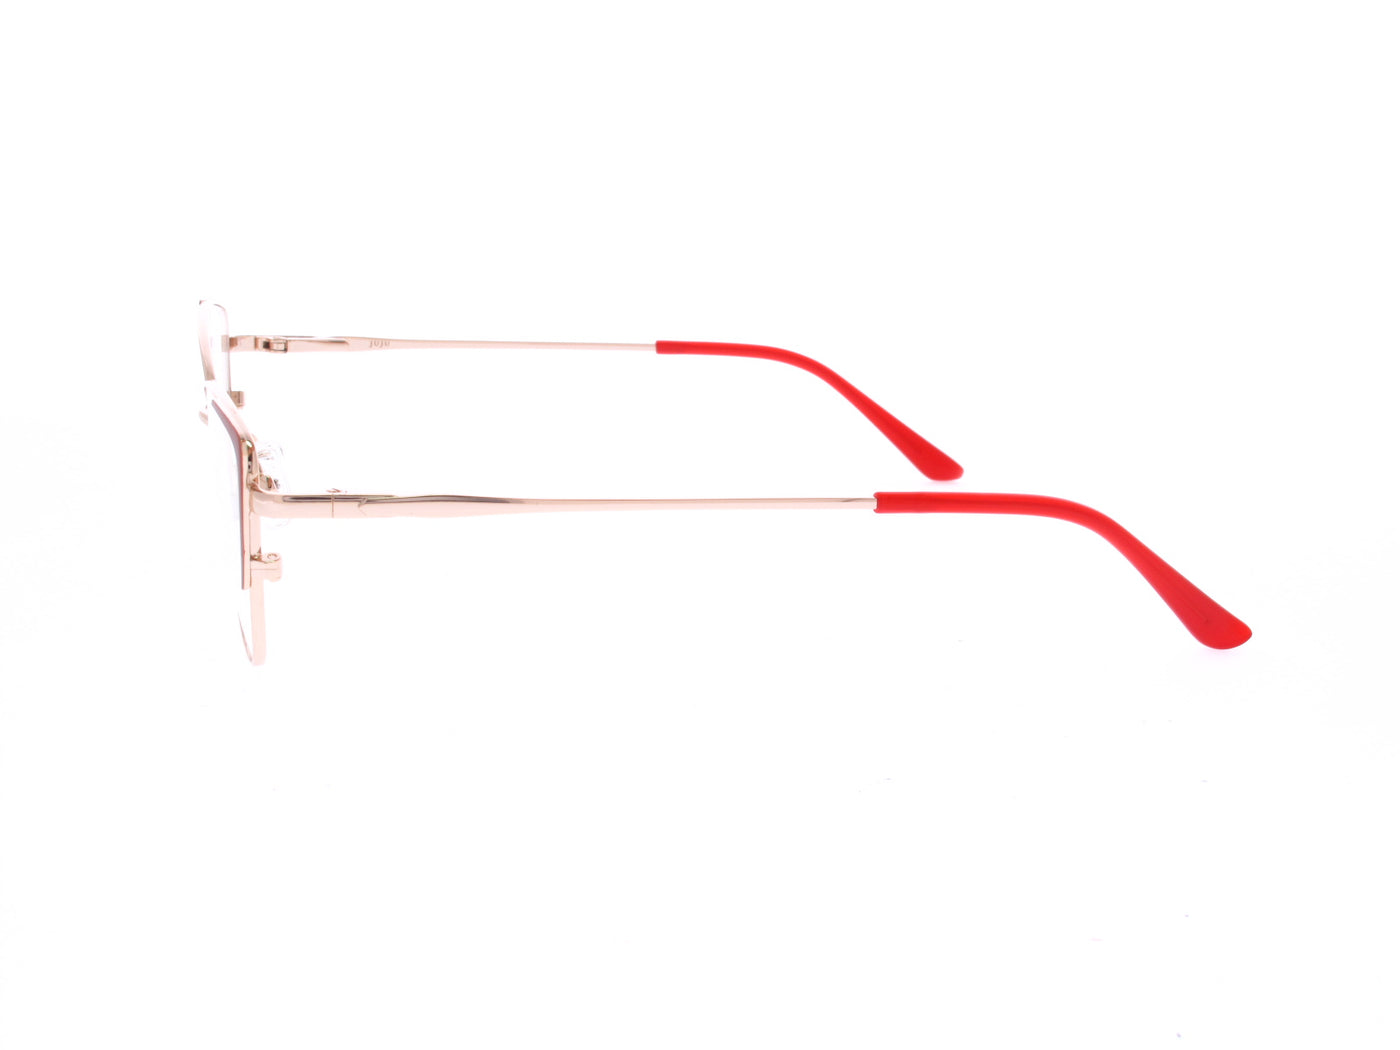 Cateye Glasses 974719